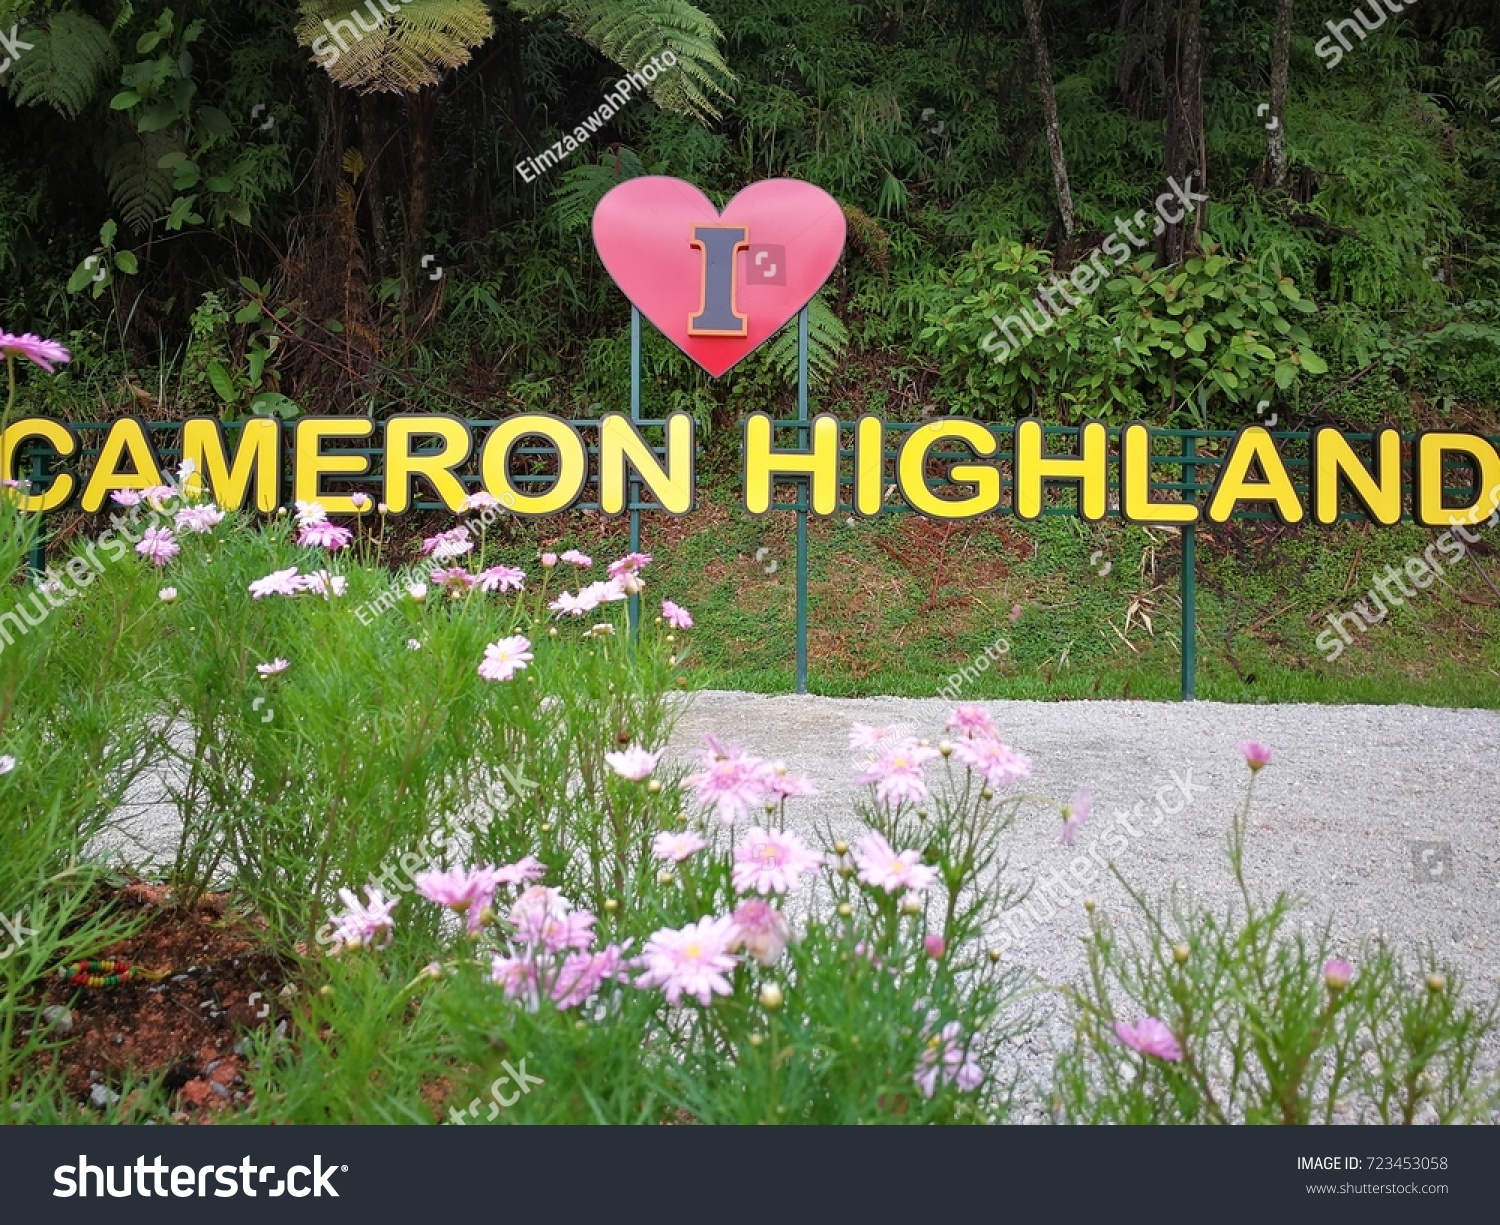 Cameron highland